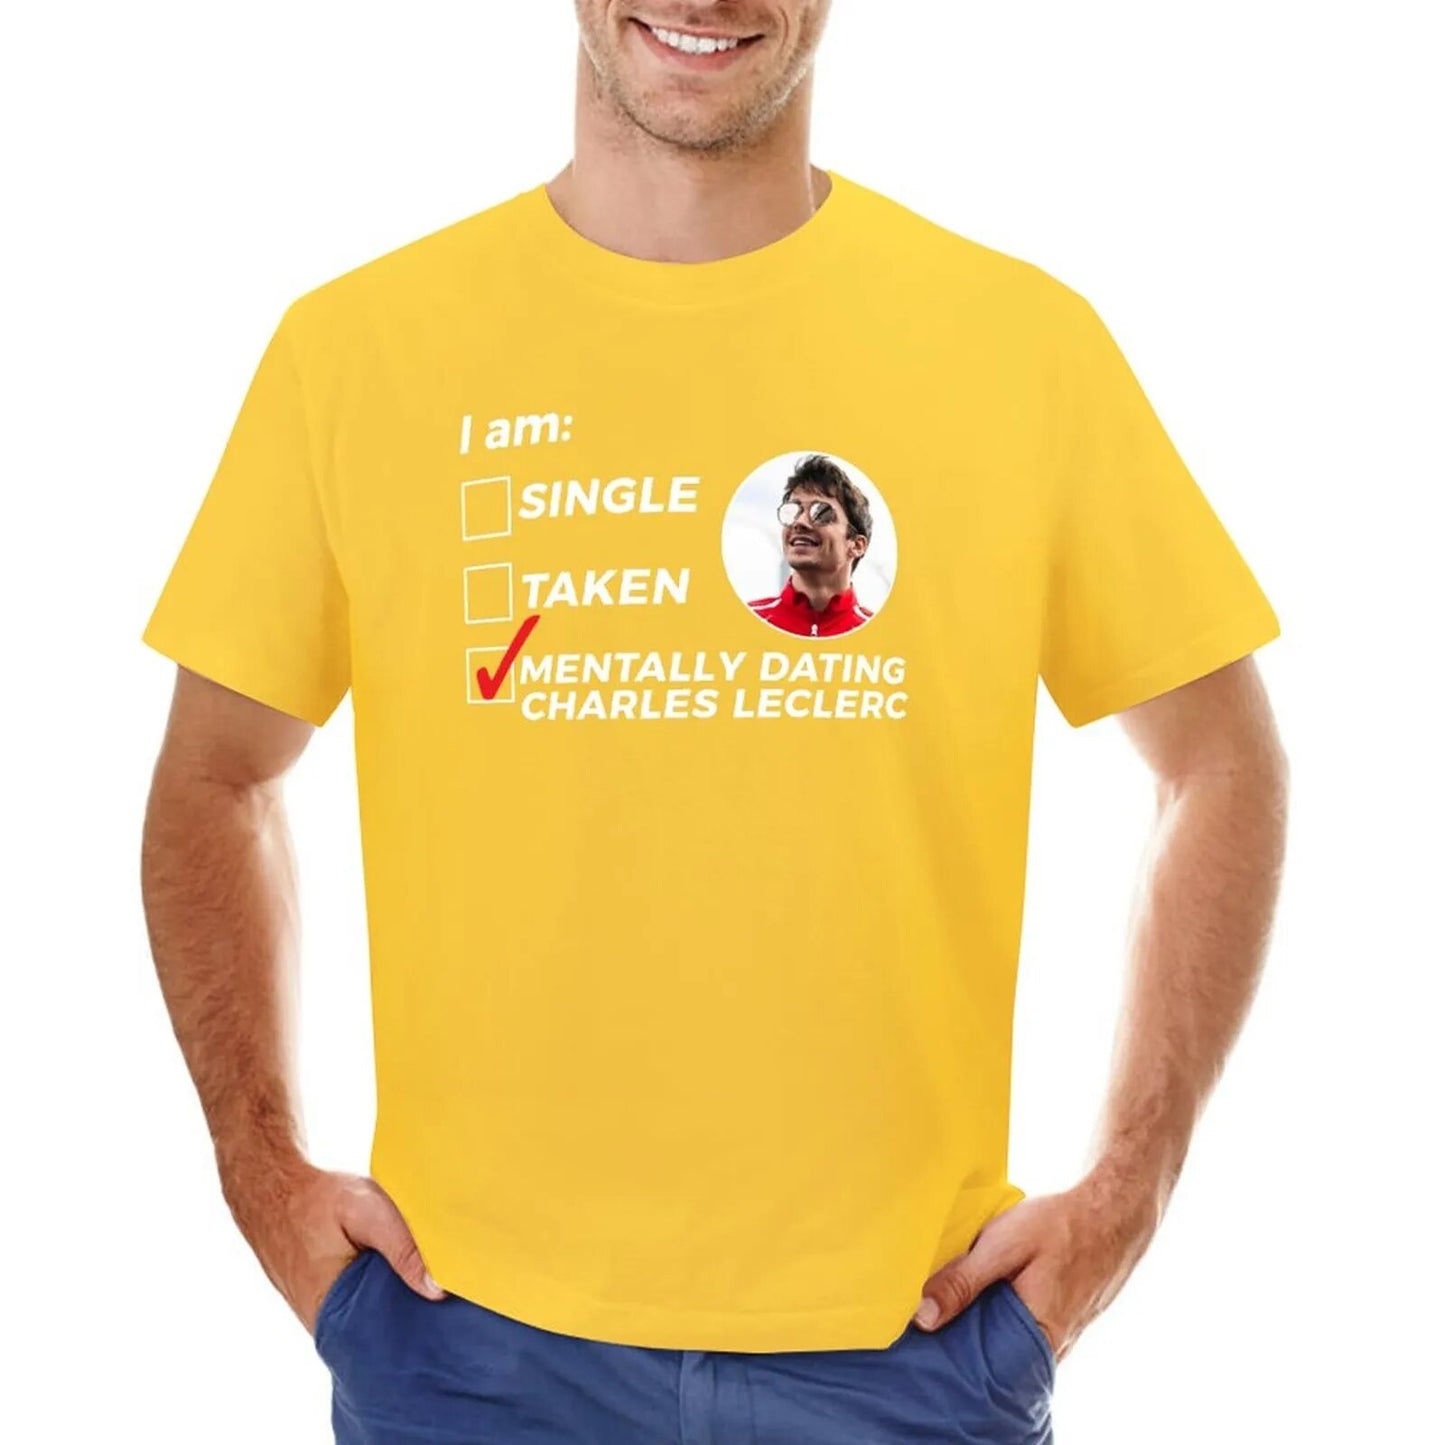 F1 Ferrari Team Star "Dating Charles Leclerc" T-Shirt | Great Formula 1 Gift